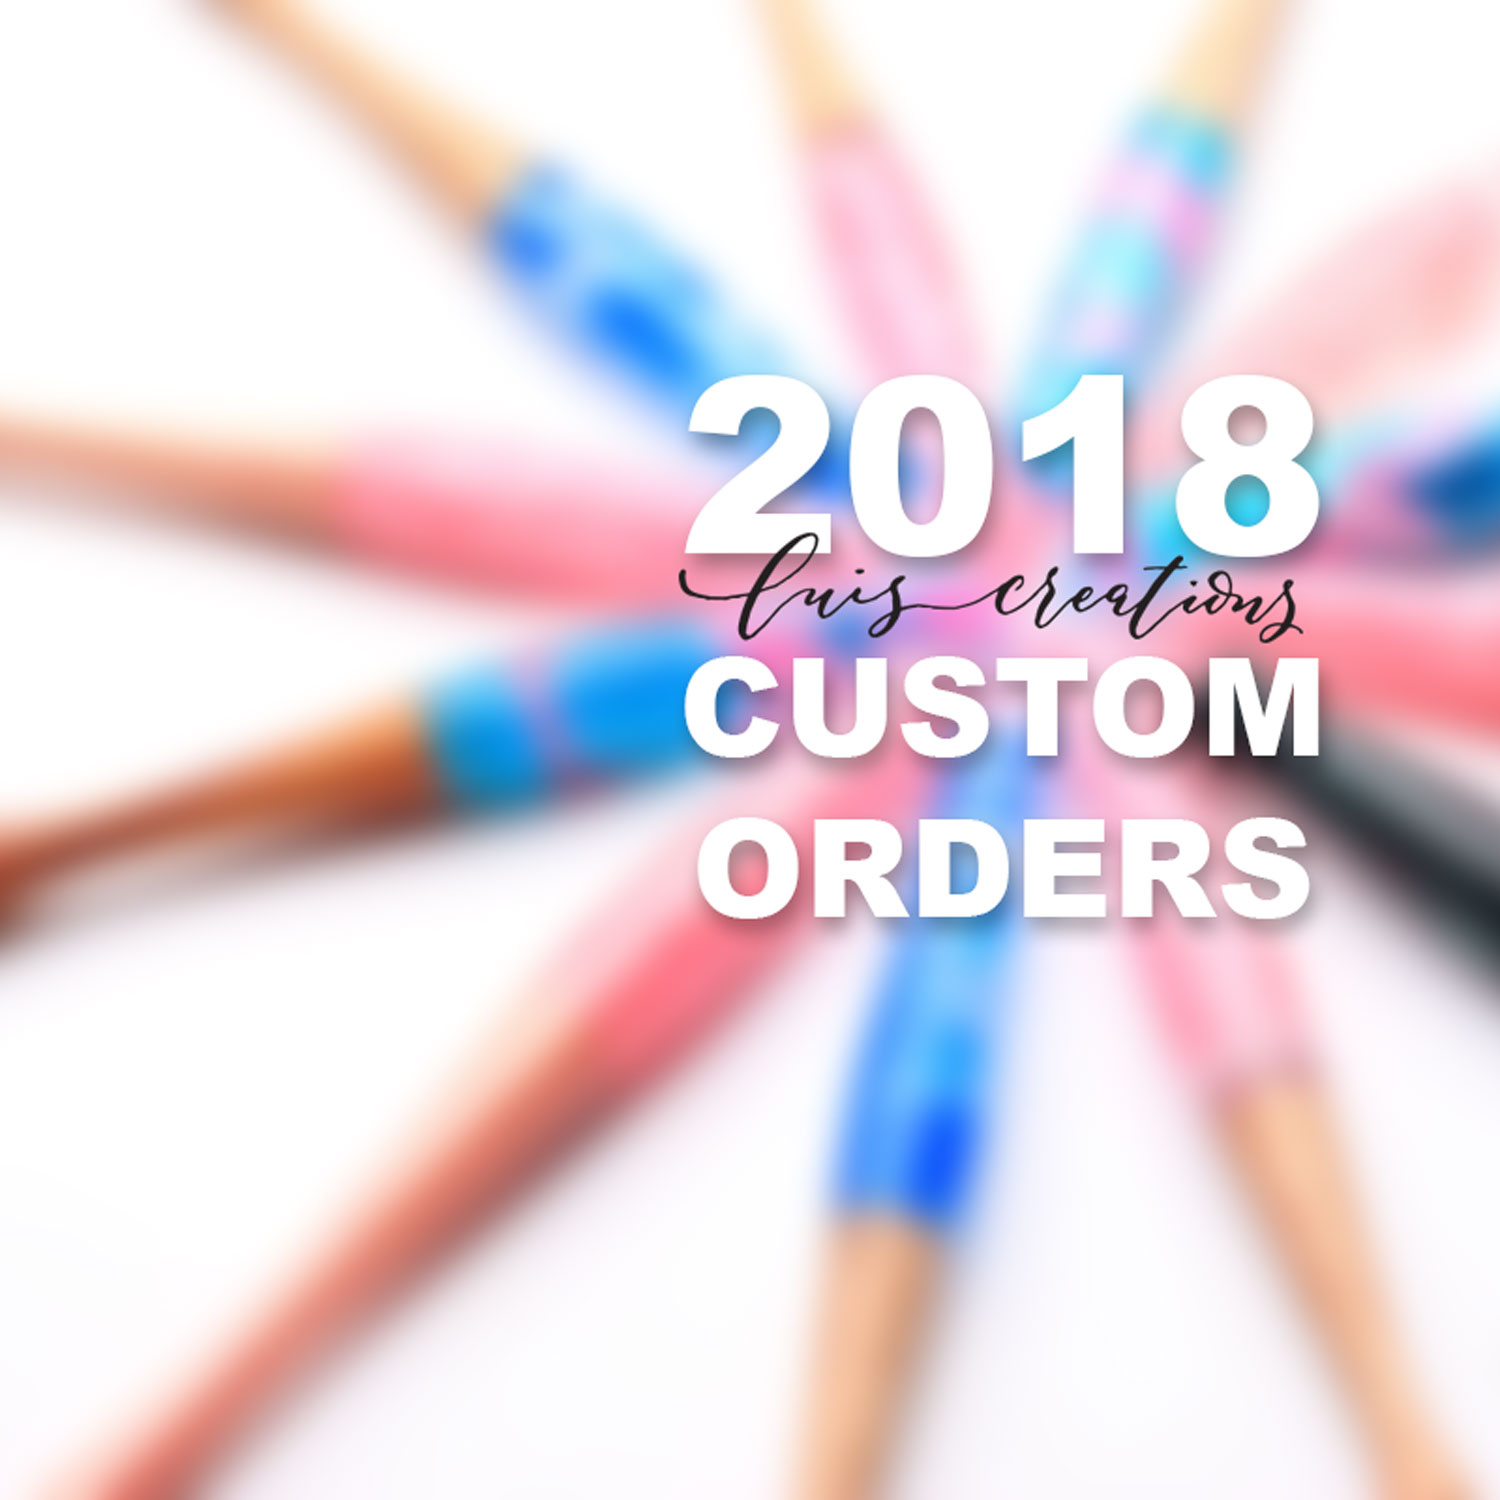 Custom Orders For Feb 2018